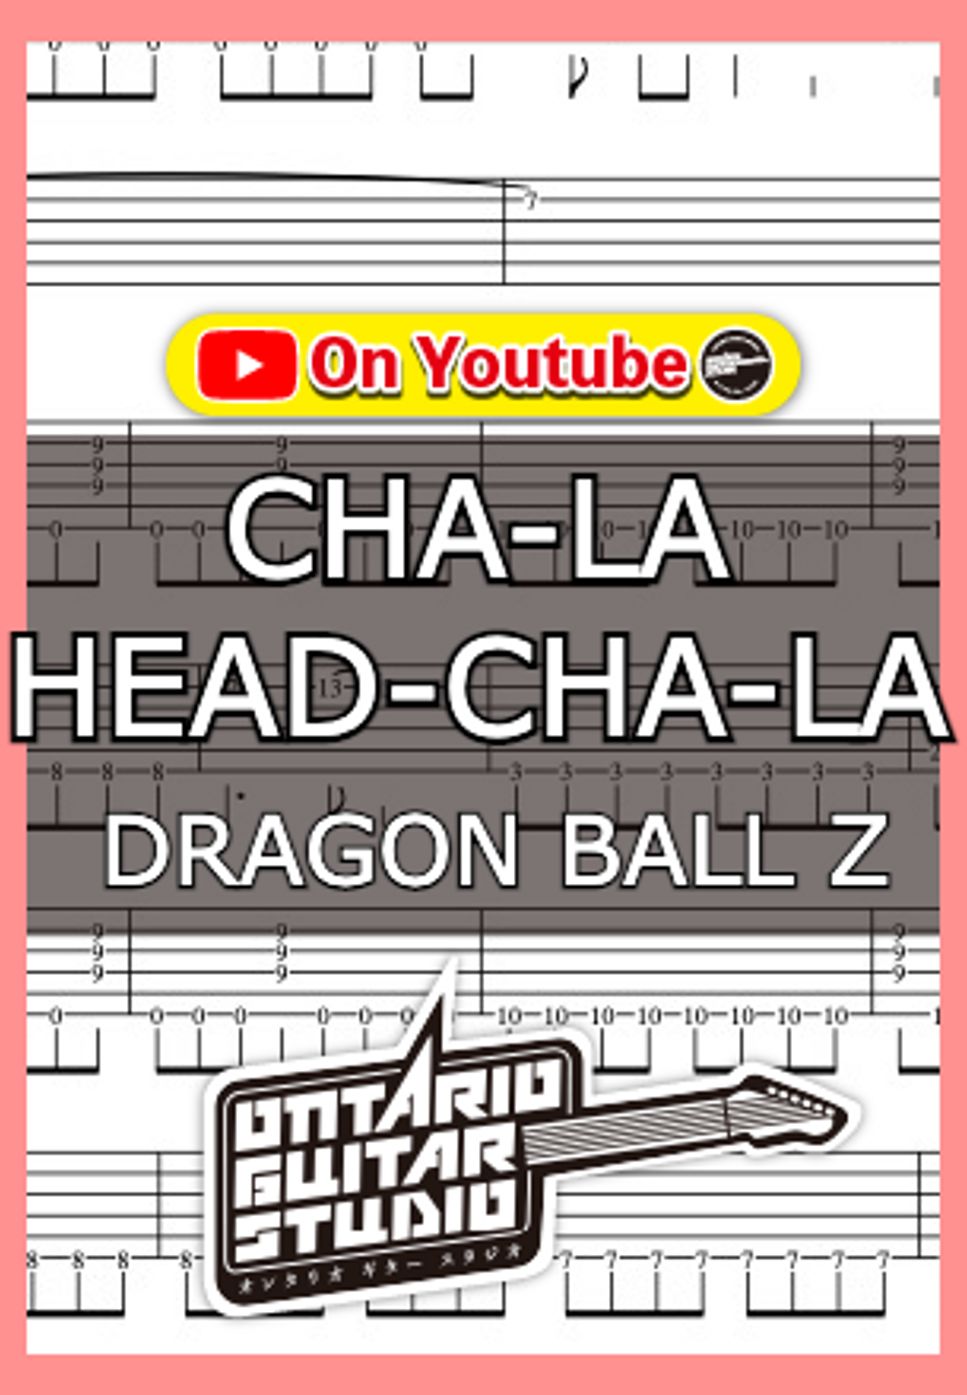 Dragon Ball Z - Cha-La Head-Cha-La by Ontario Guitar Studio